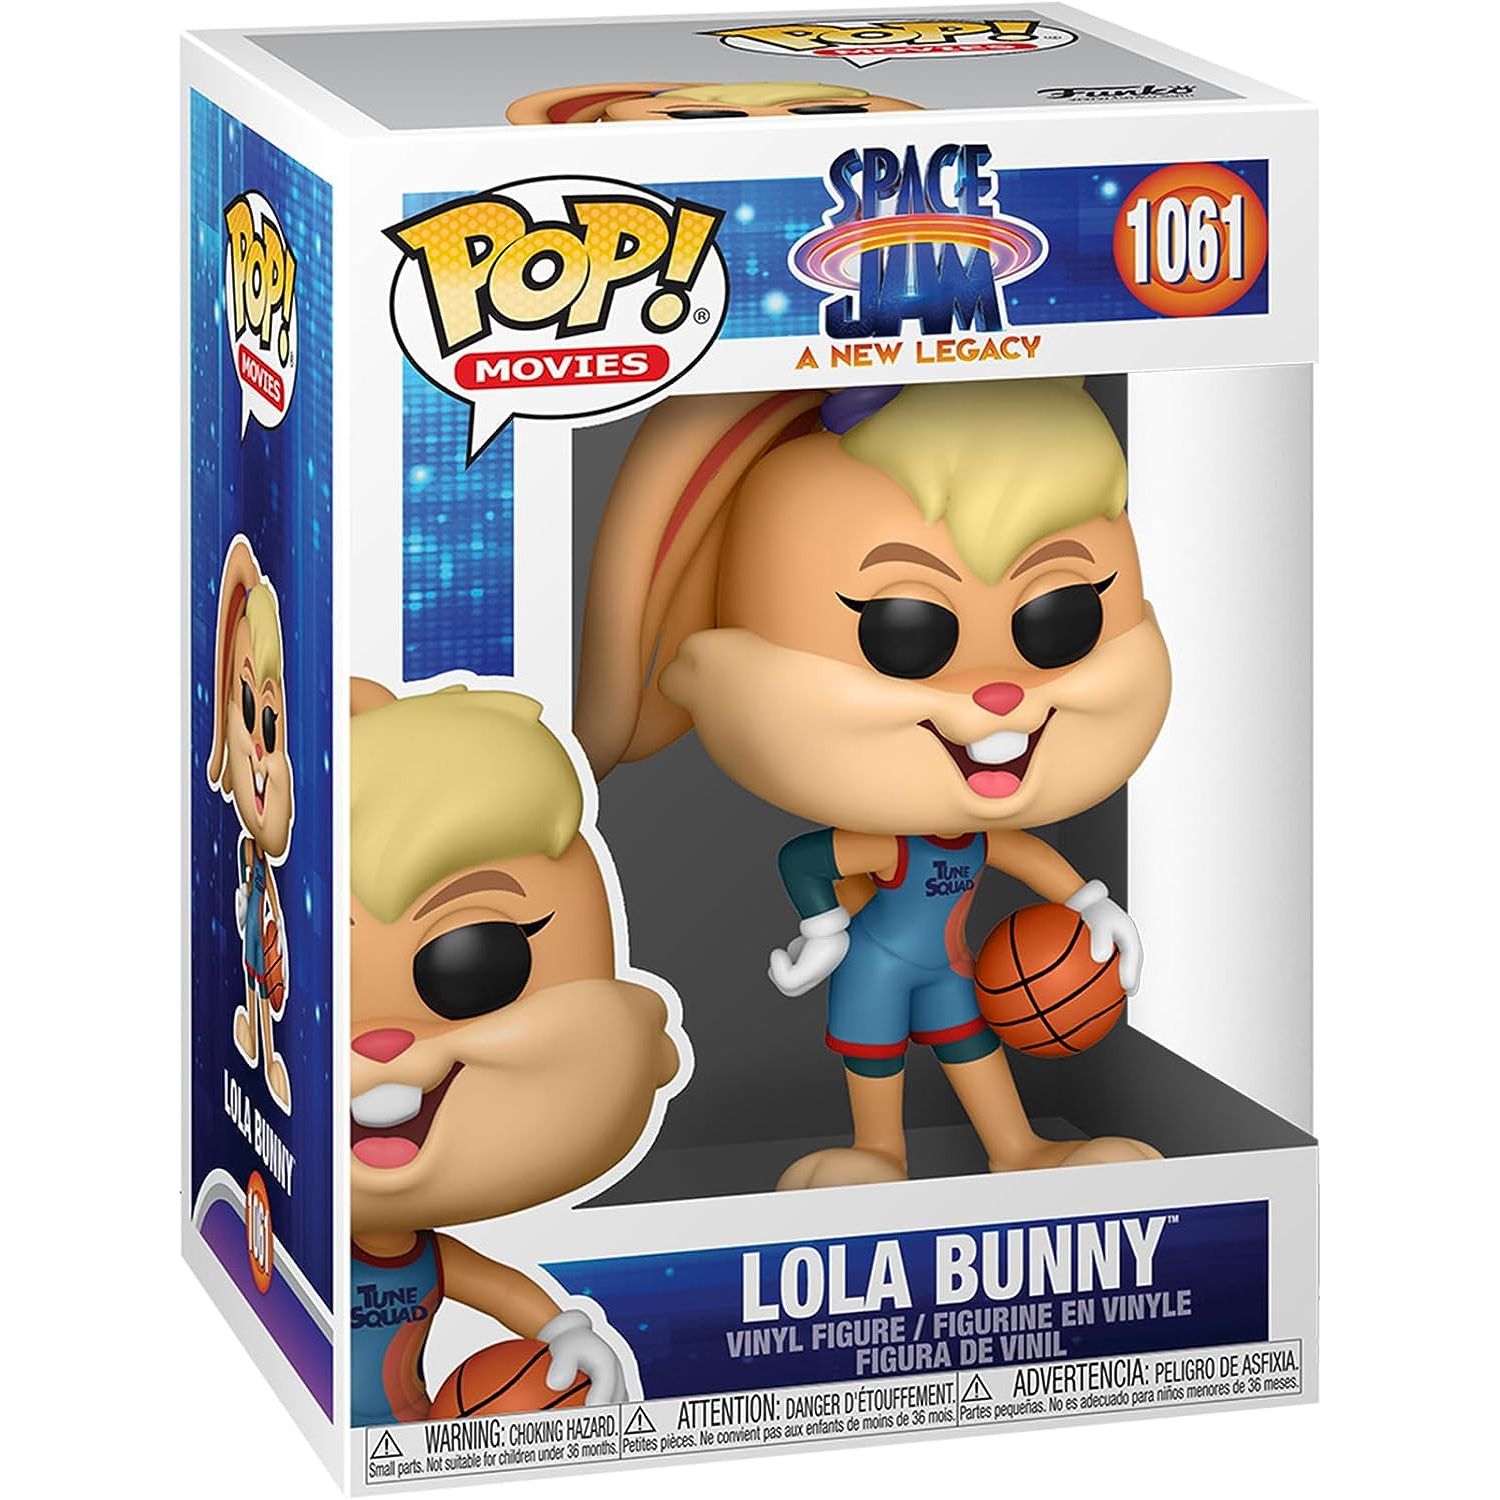 Funko POP Movies Space Jam, A New Legacy - Lola Bunny